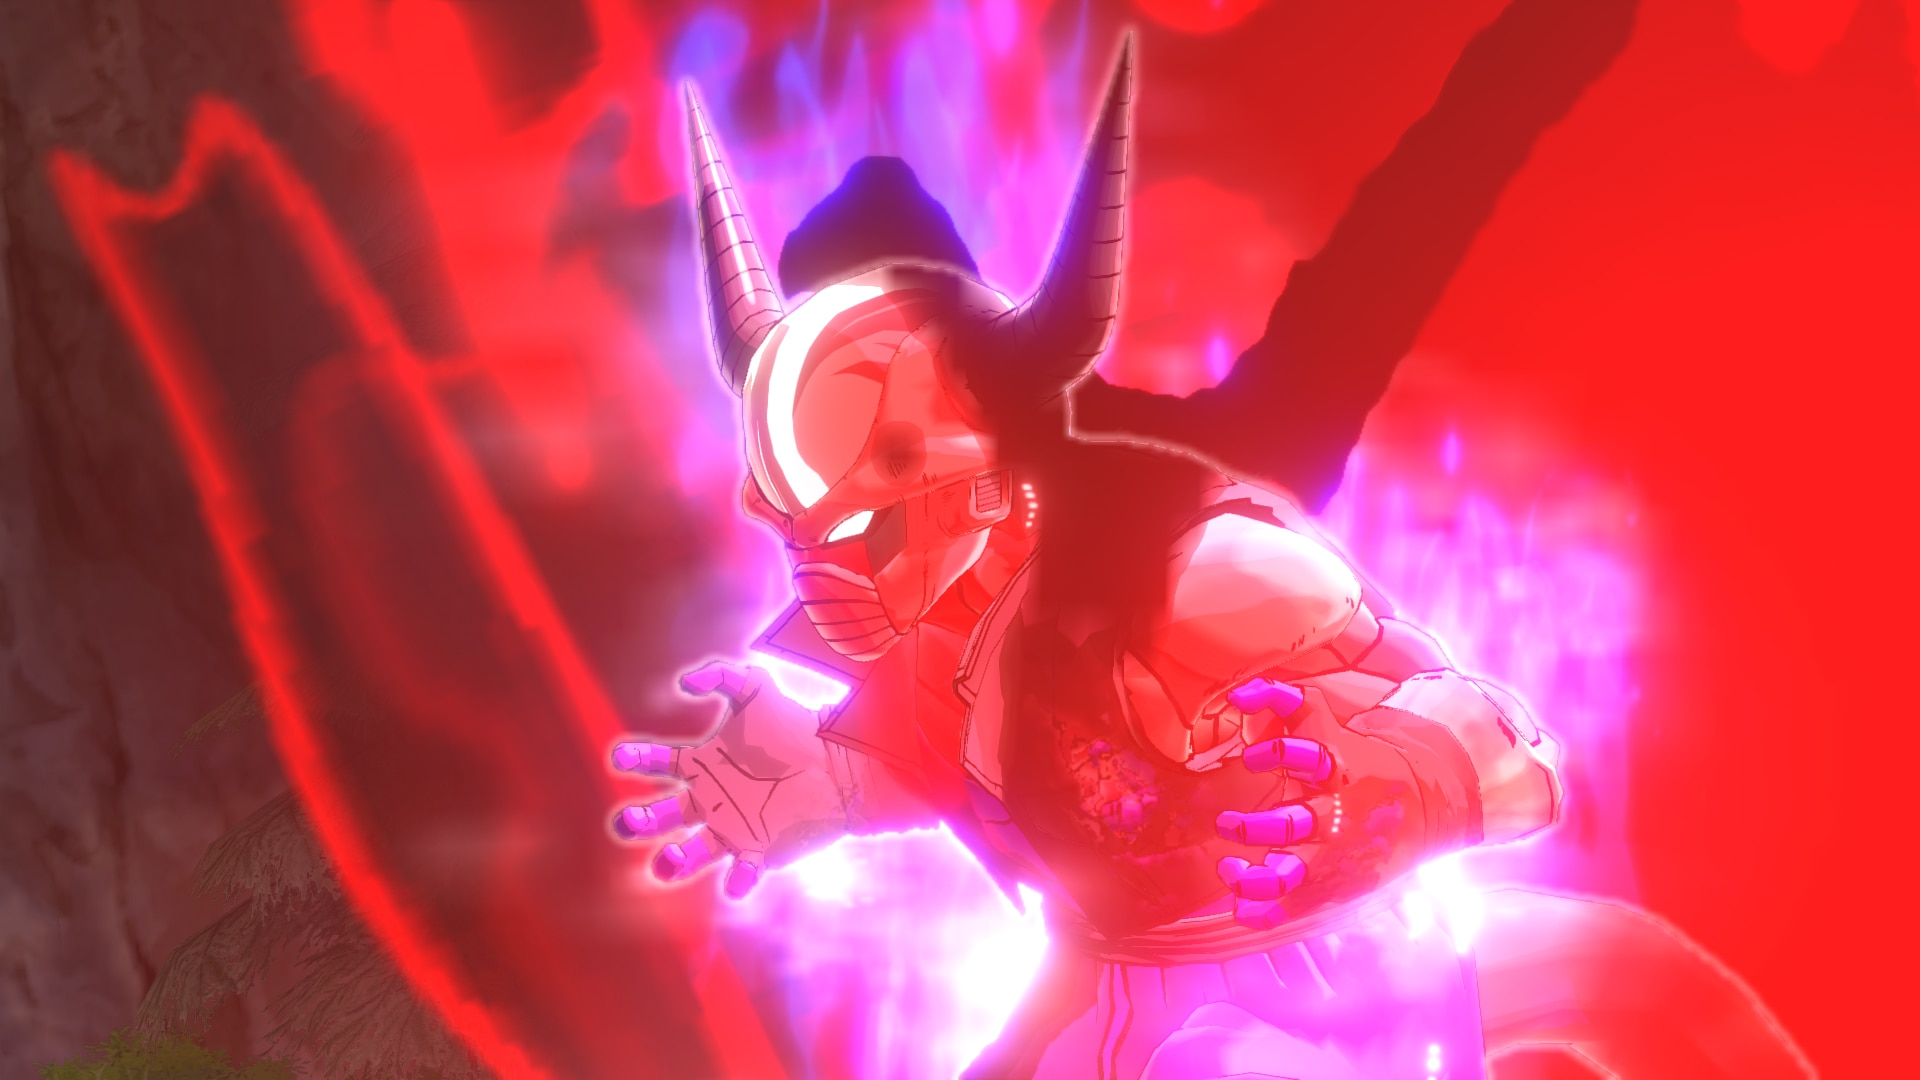 Burning Flash - Dragon Ball Xenoverse 2 Mods